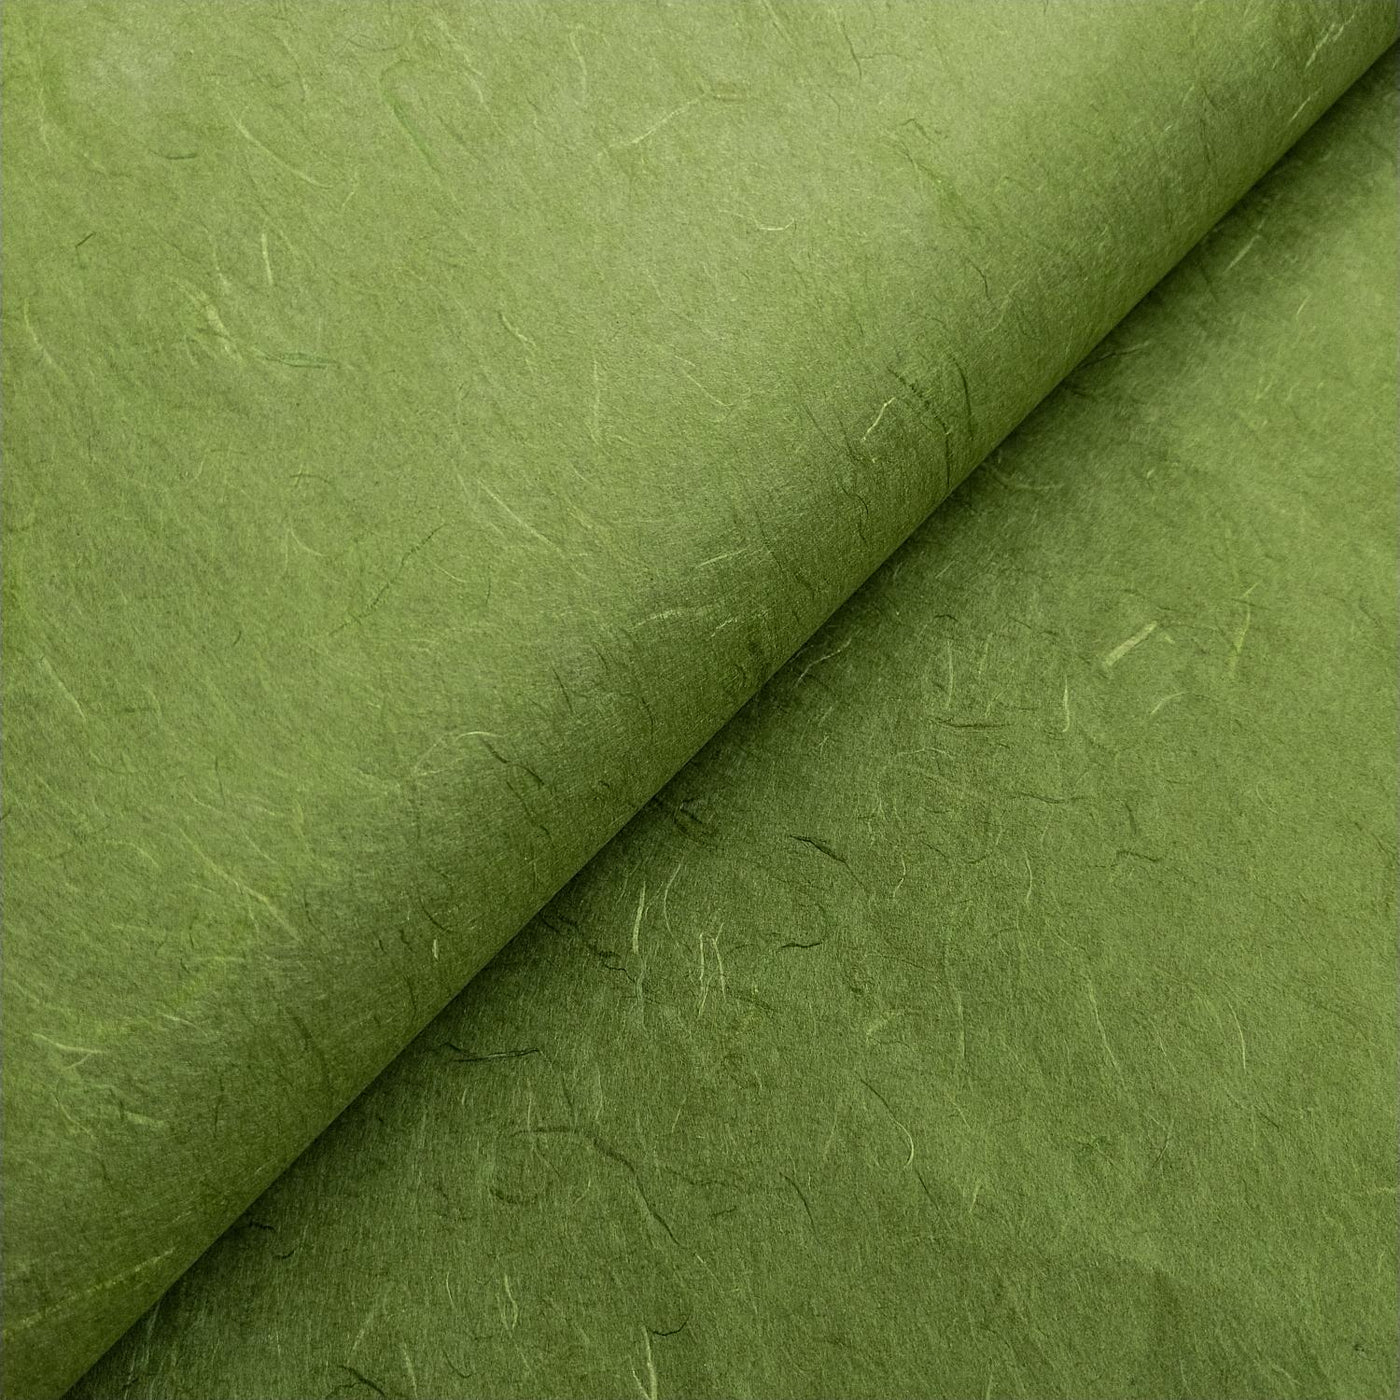 Unryu Kozo Mulberry Paper (Fern Green)